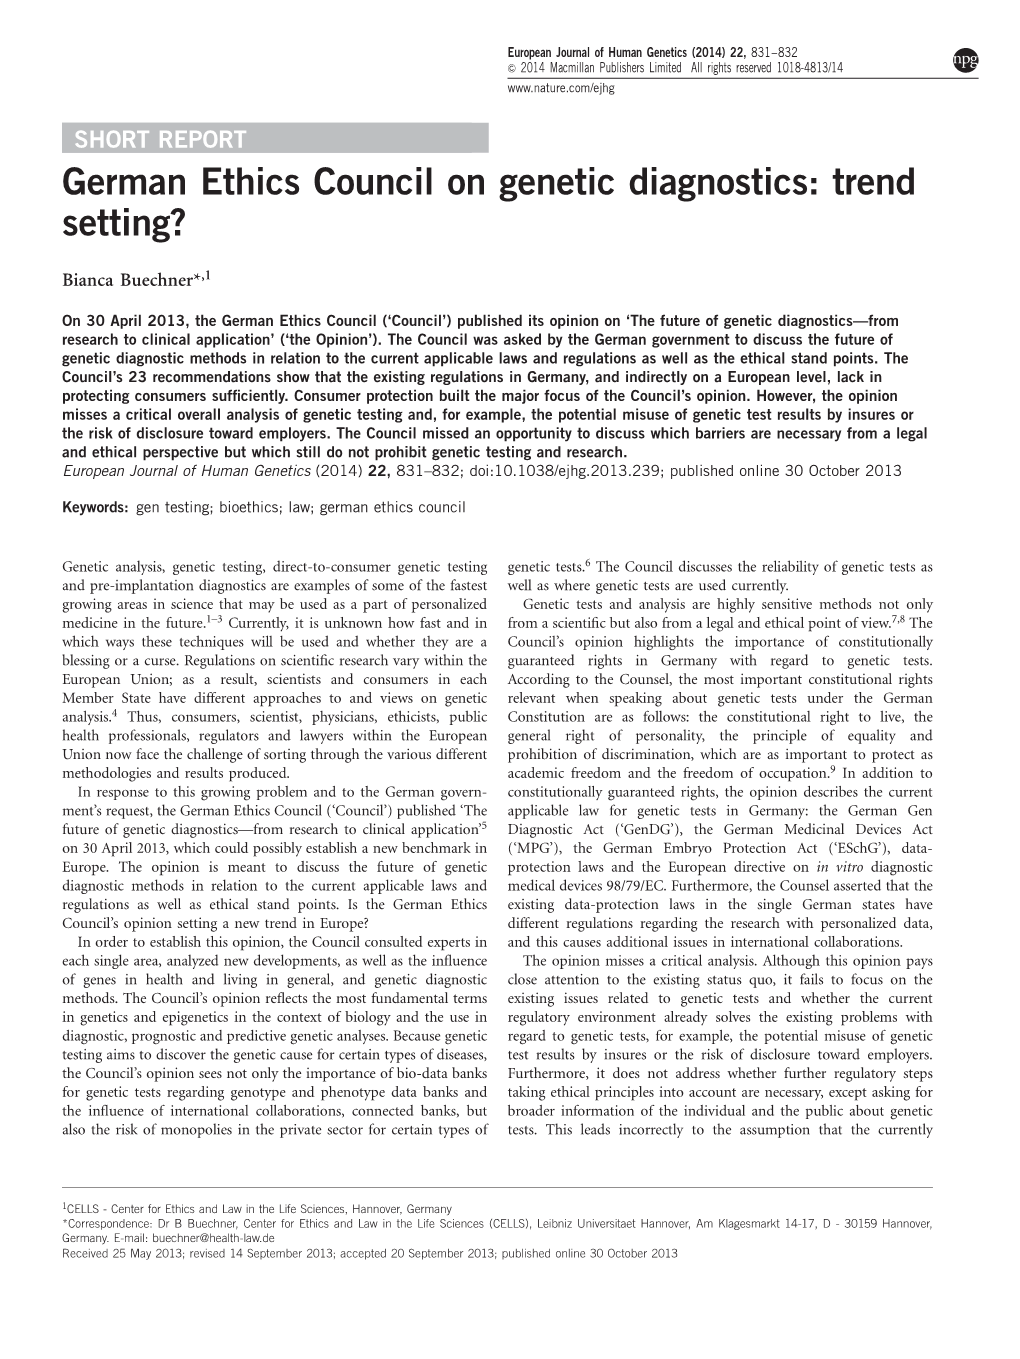 German Ethics Council on Genetic Diagnostics: Trend Setting?